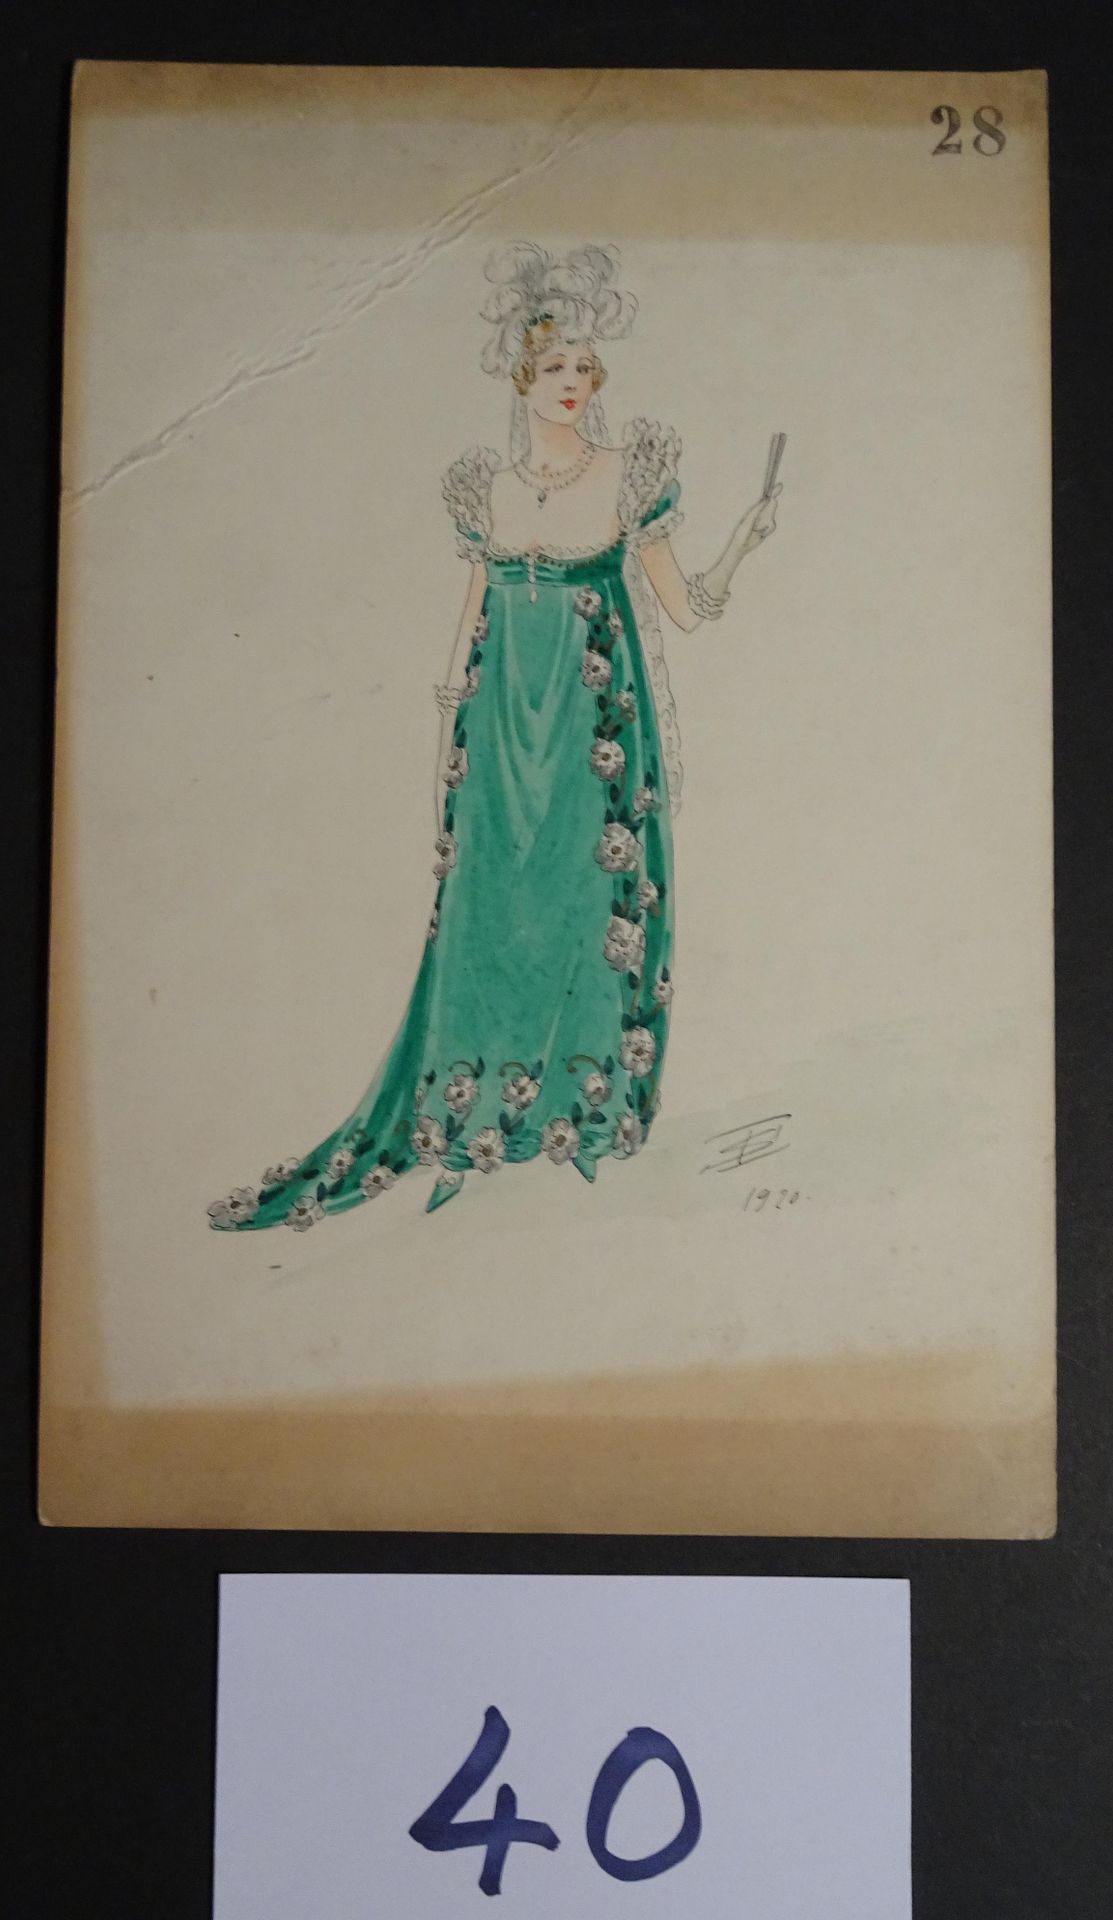 SOKOLOFF SOKOLOFF IGOR (20世纪初)

"拿着扇子的女人"。钢笔、墨水和水彩画。右下方有签名，日期为1920年。27 x 18厘米。